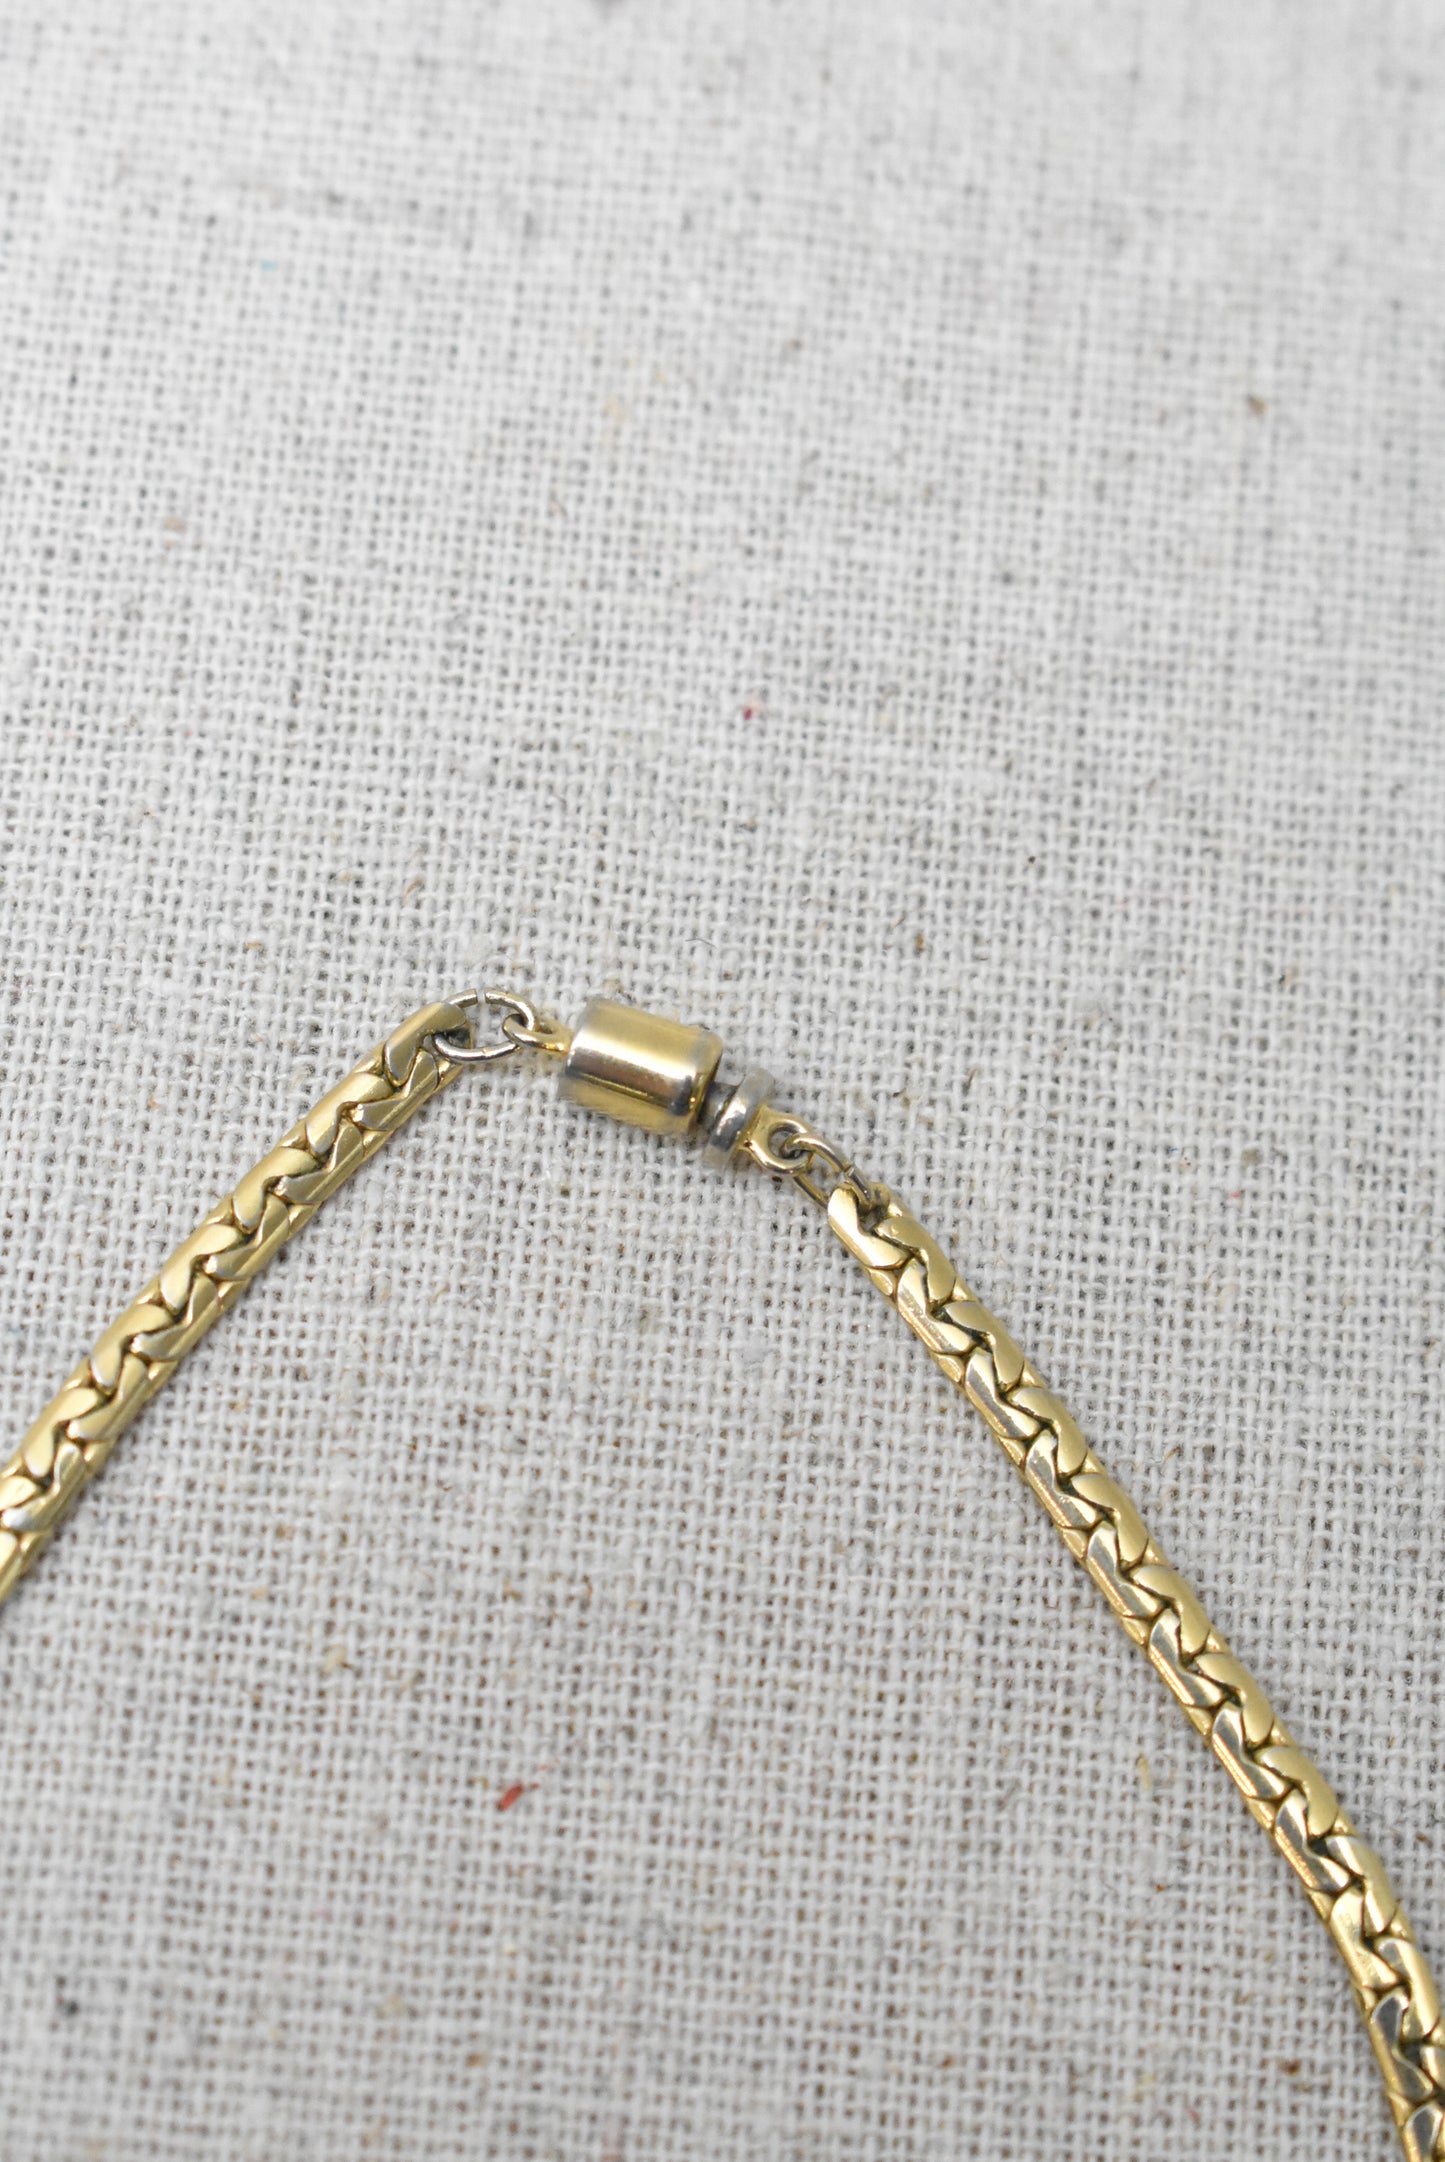 C-link short chain necklace